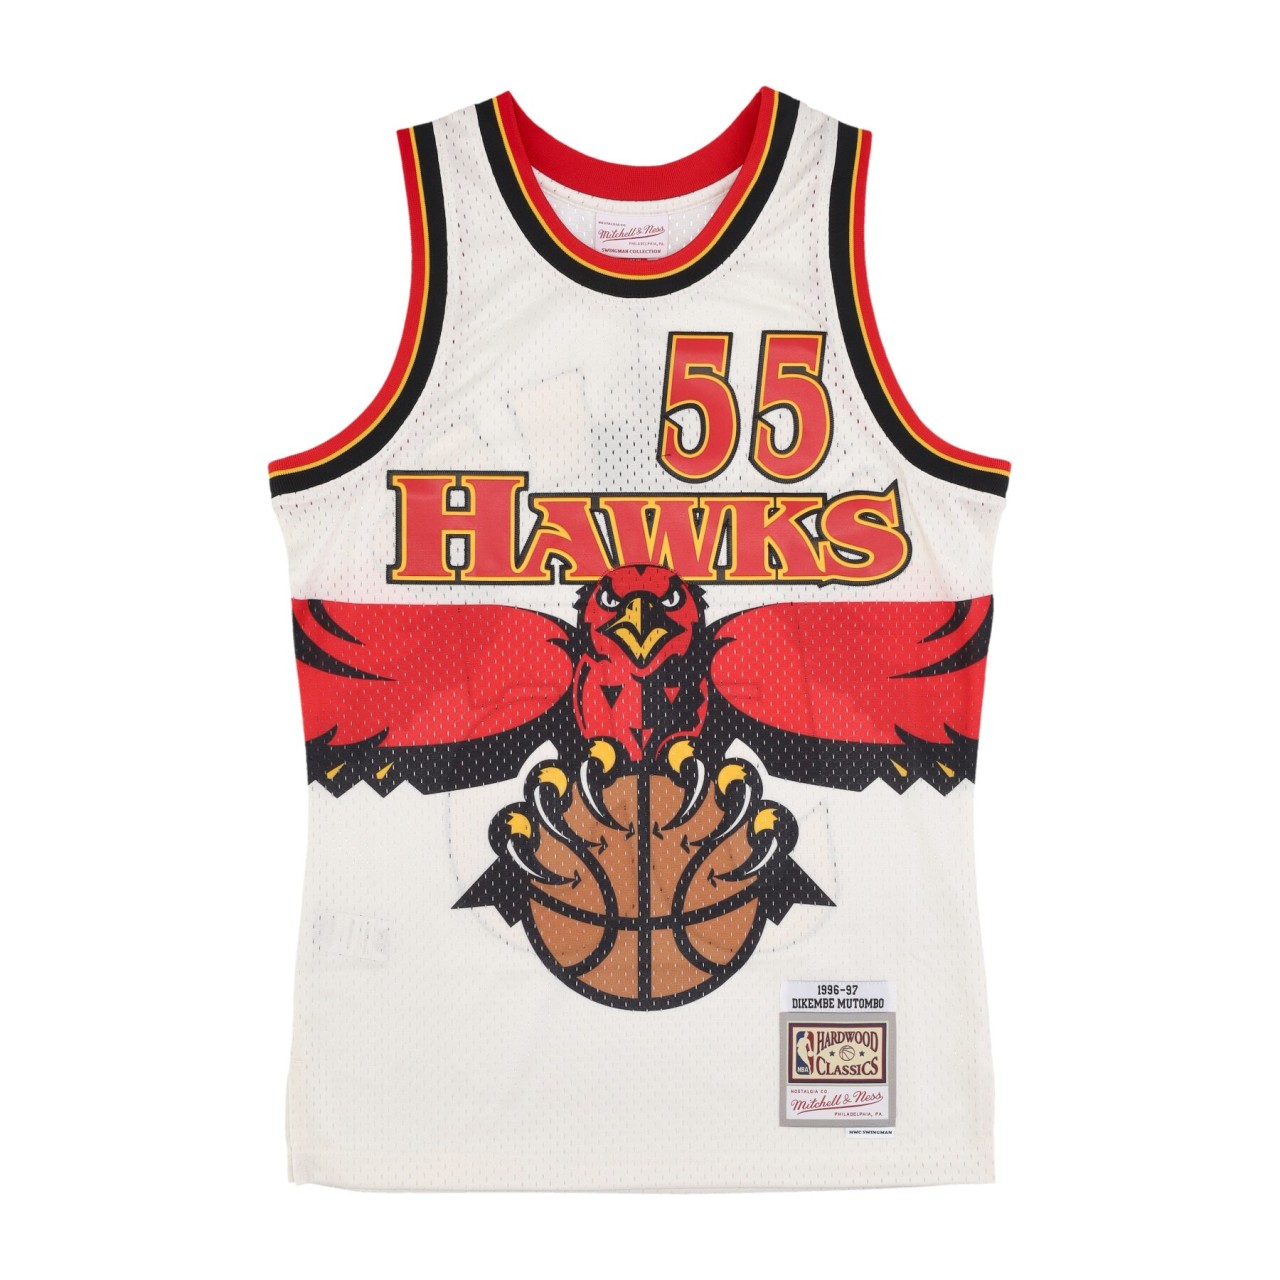 MITCHELL & NESS NBA OFF WHITE TEAM COLOR SWINGMAN JERSEY HARDWOOD CLASSICS 1996 NO 55 DIKEMBE MUTOMBO ATLHAW TFSM5052-AHA96DMOOFWH